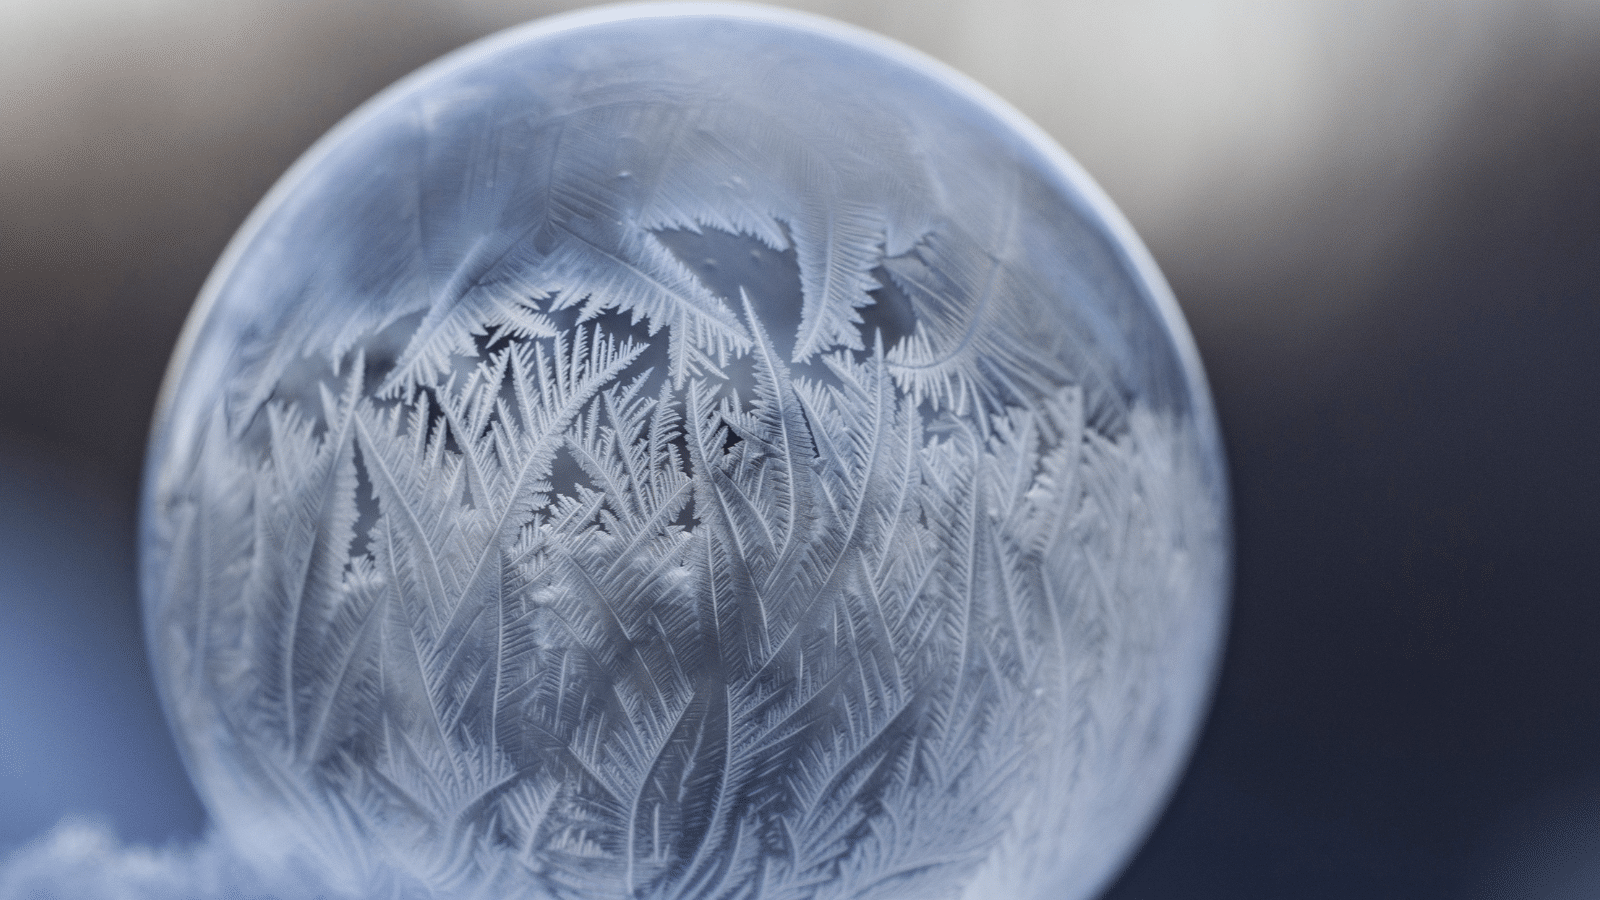 Frozen soap bubble, illustration for fantasy/science fiction story Frozen